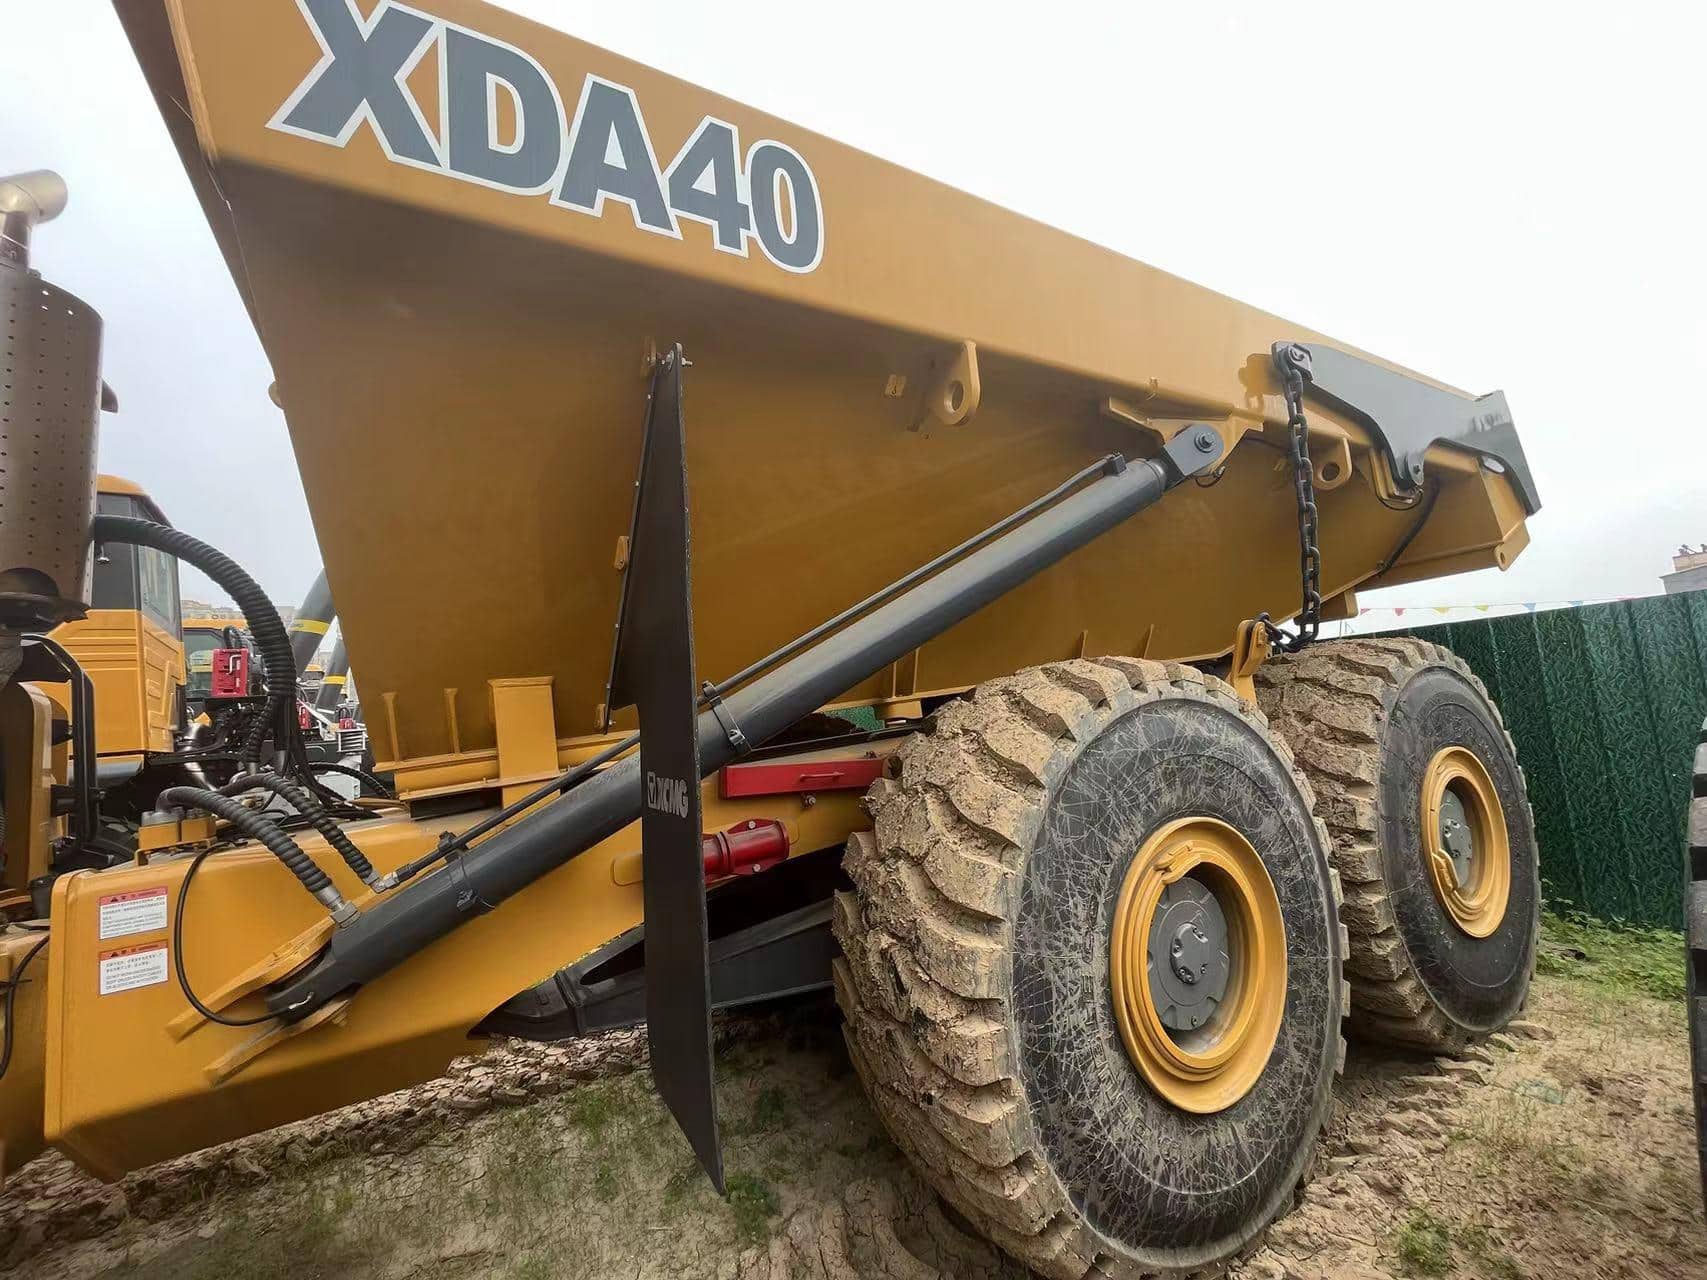 XCMG XDA40 articulated dump truck